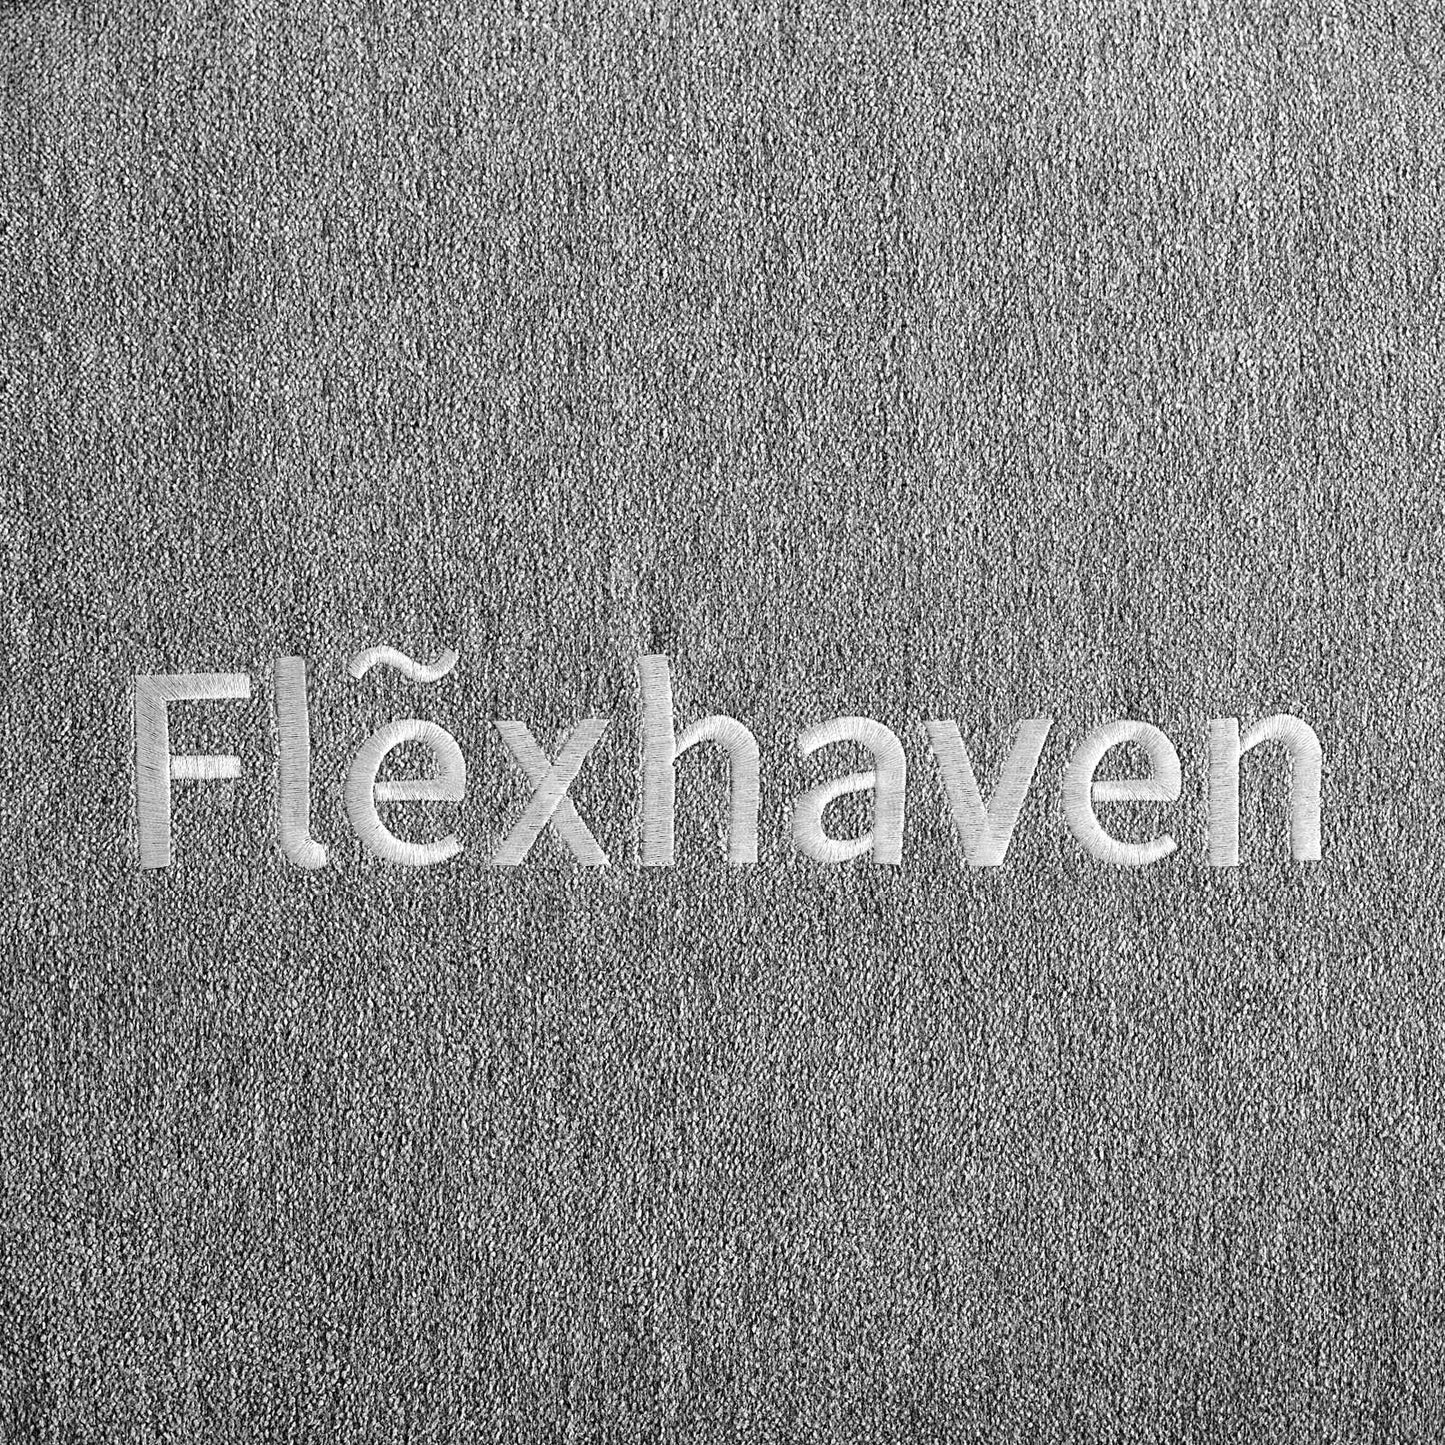 Flexhaven 10" Queen Memory mattress  FLE-770-Q